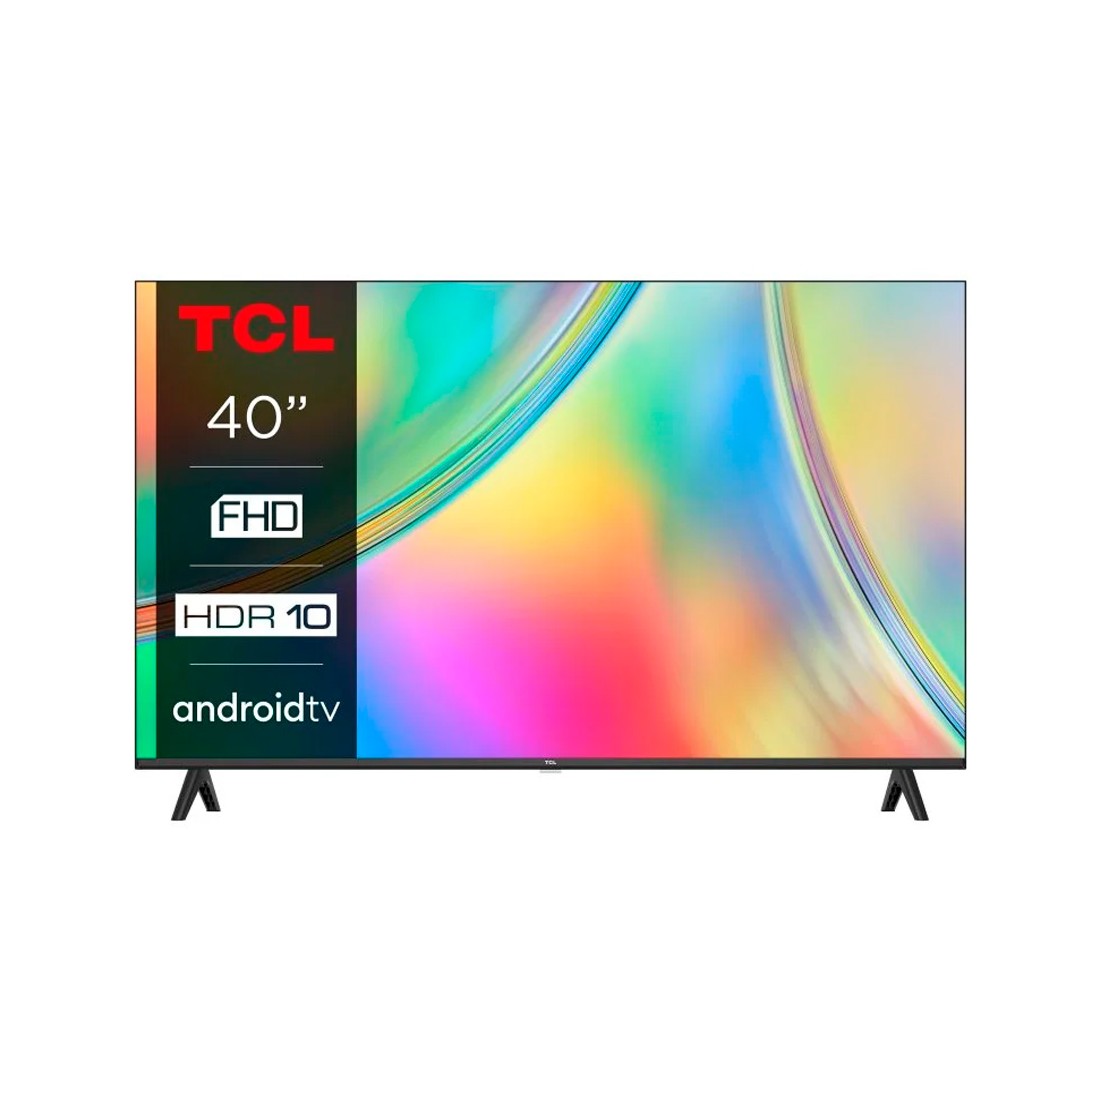 TV LED - TCL 40S5400A, 40 pulgadas, Smart TV, Full HD, DLNA